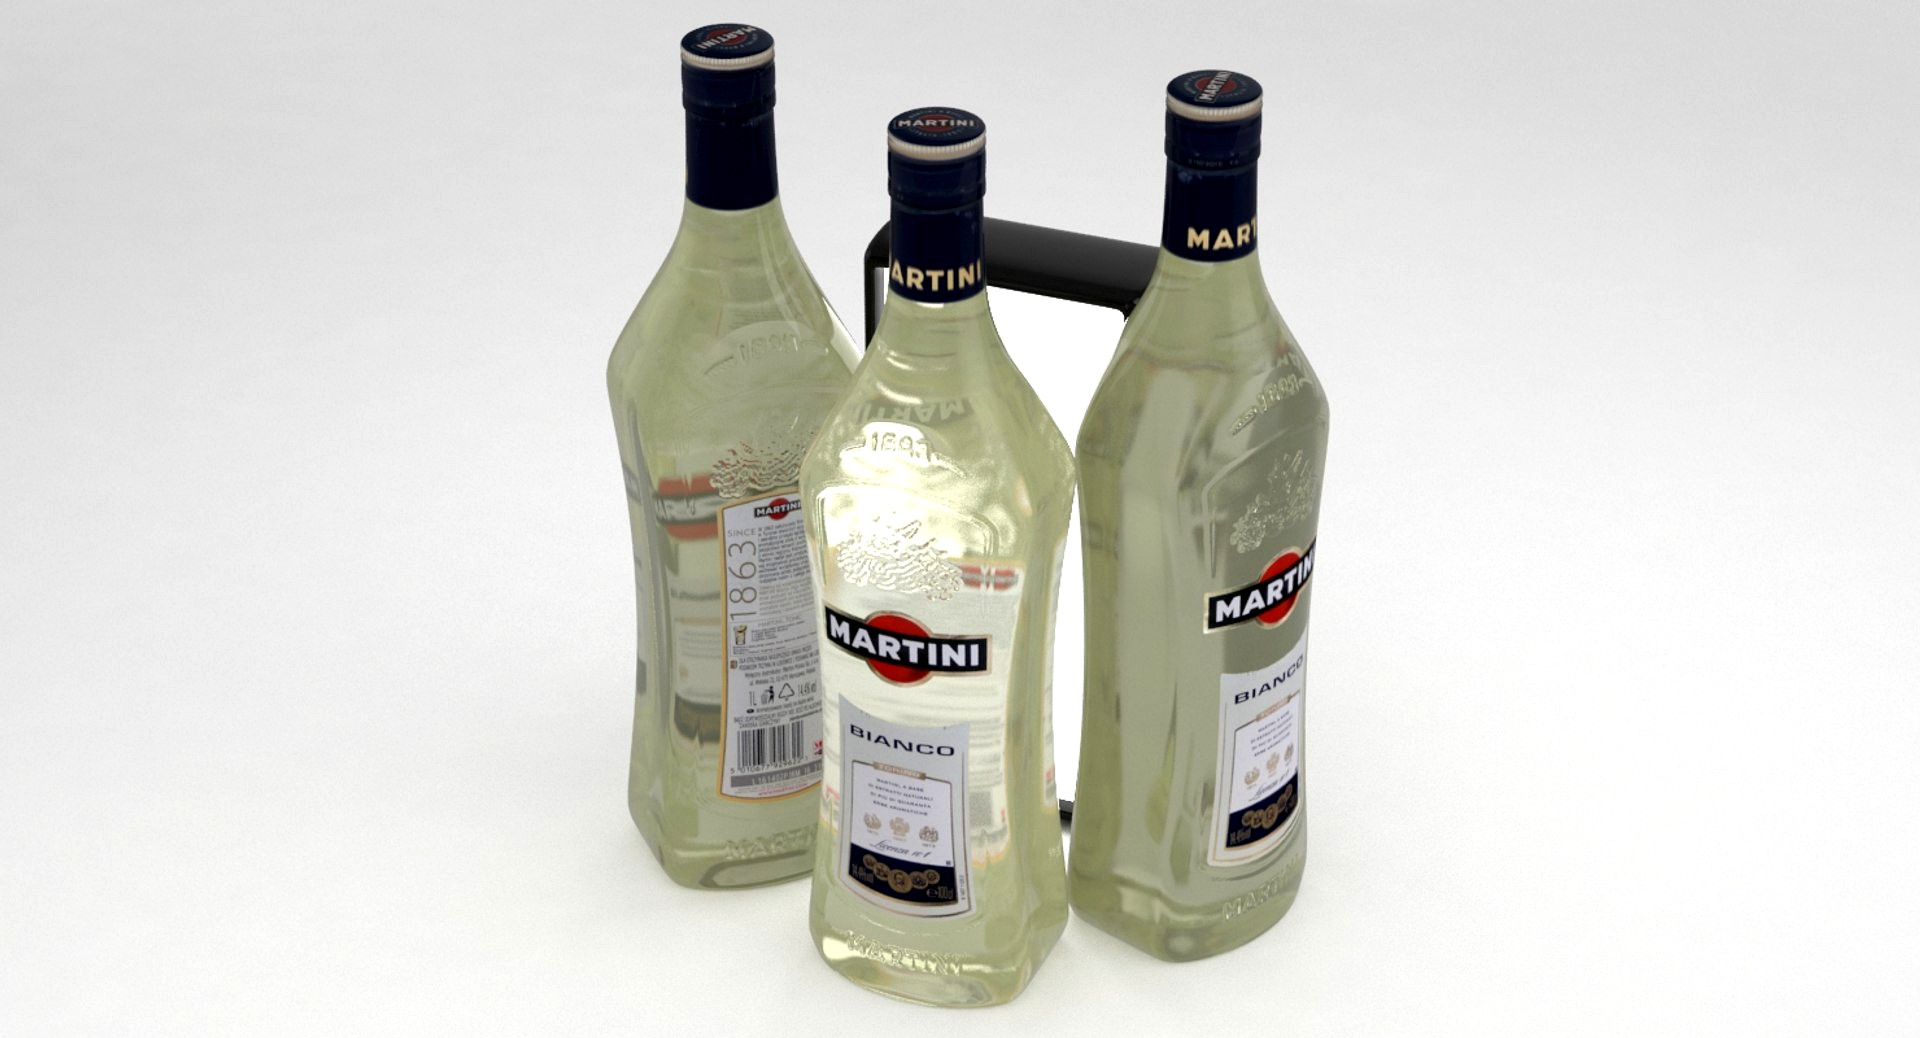 Martini Bianco 1L Bottle 2016